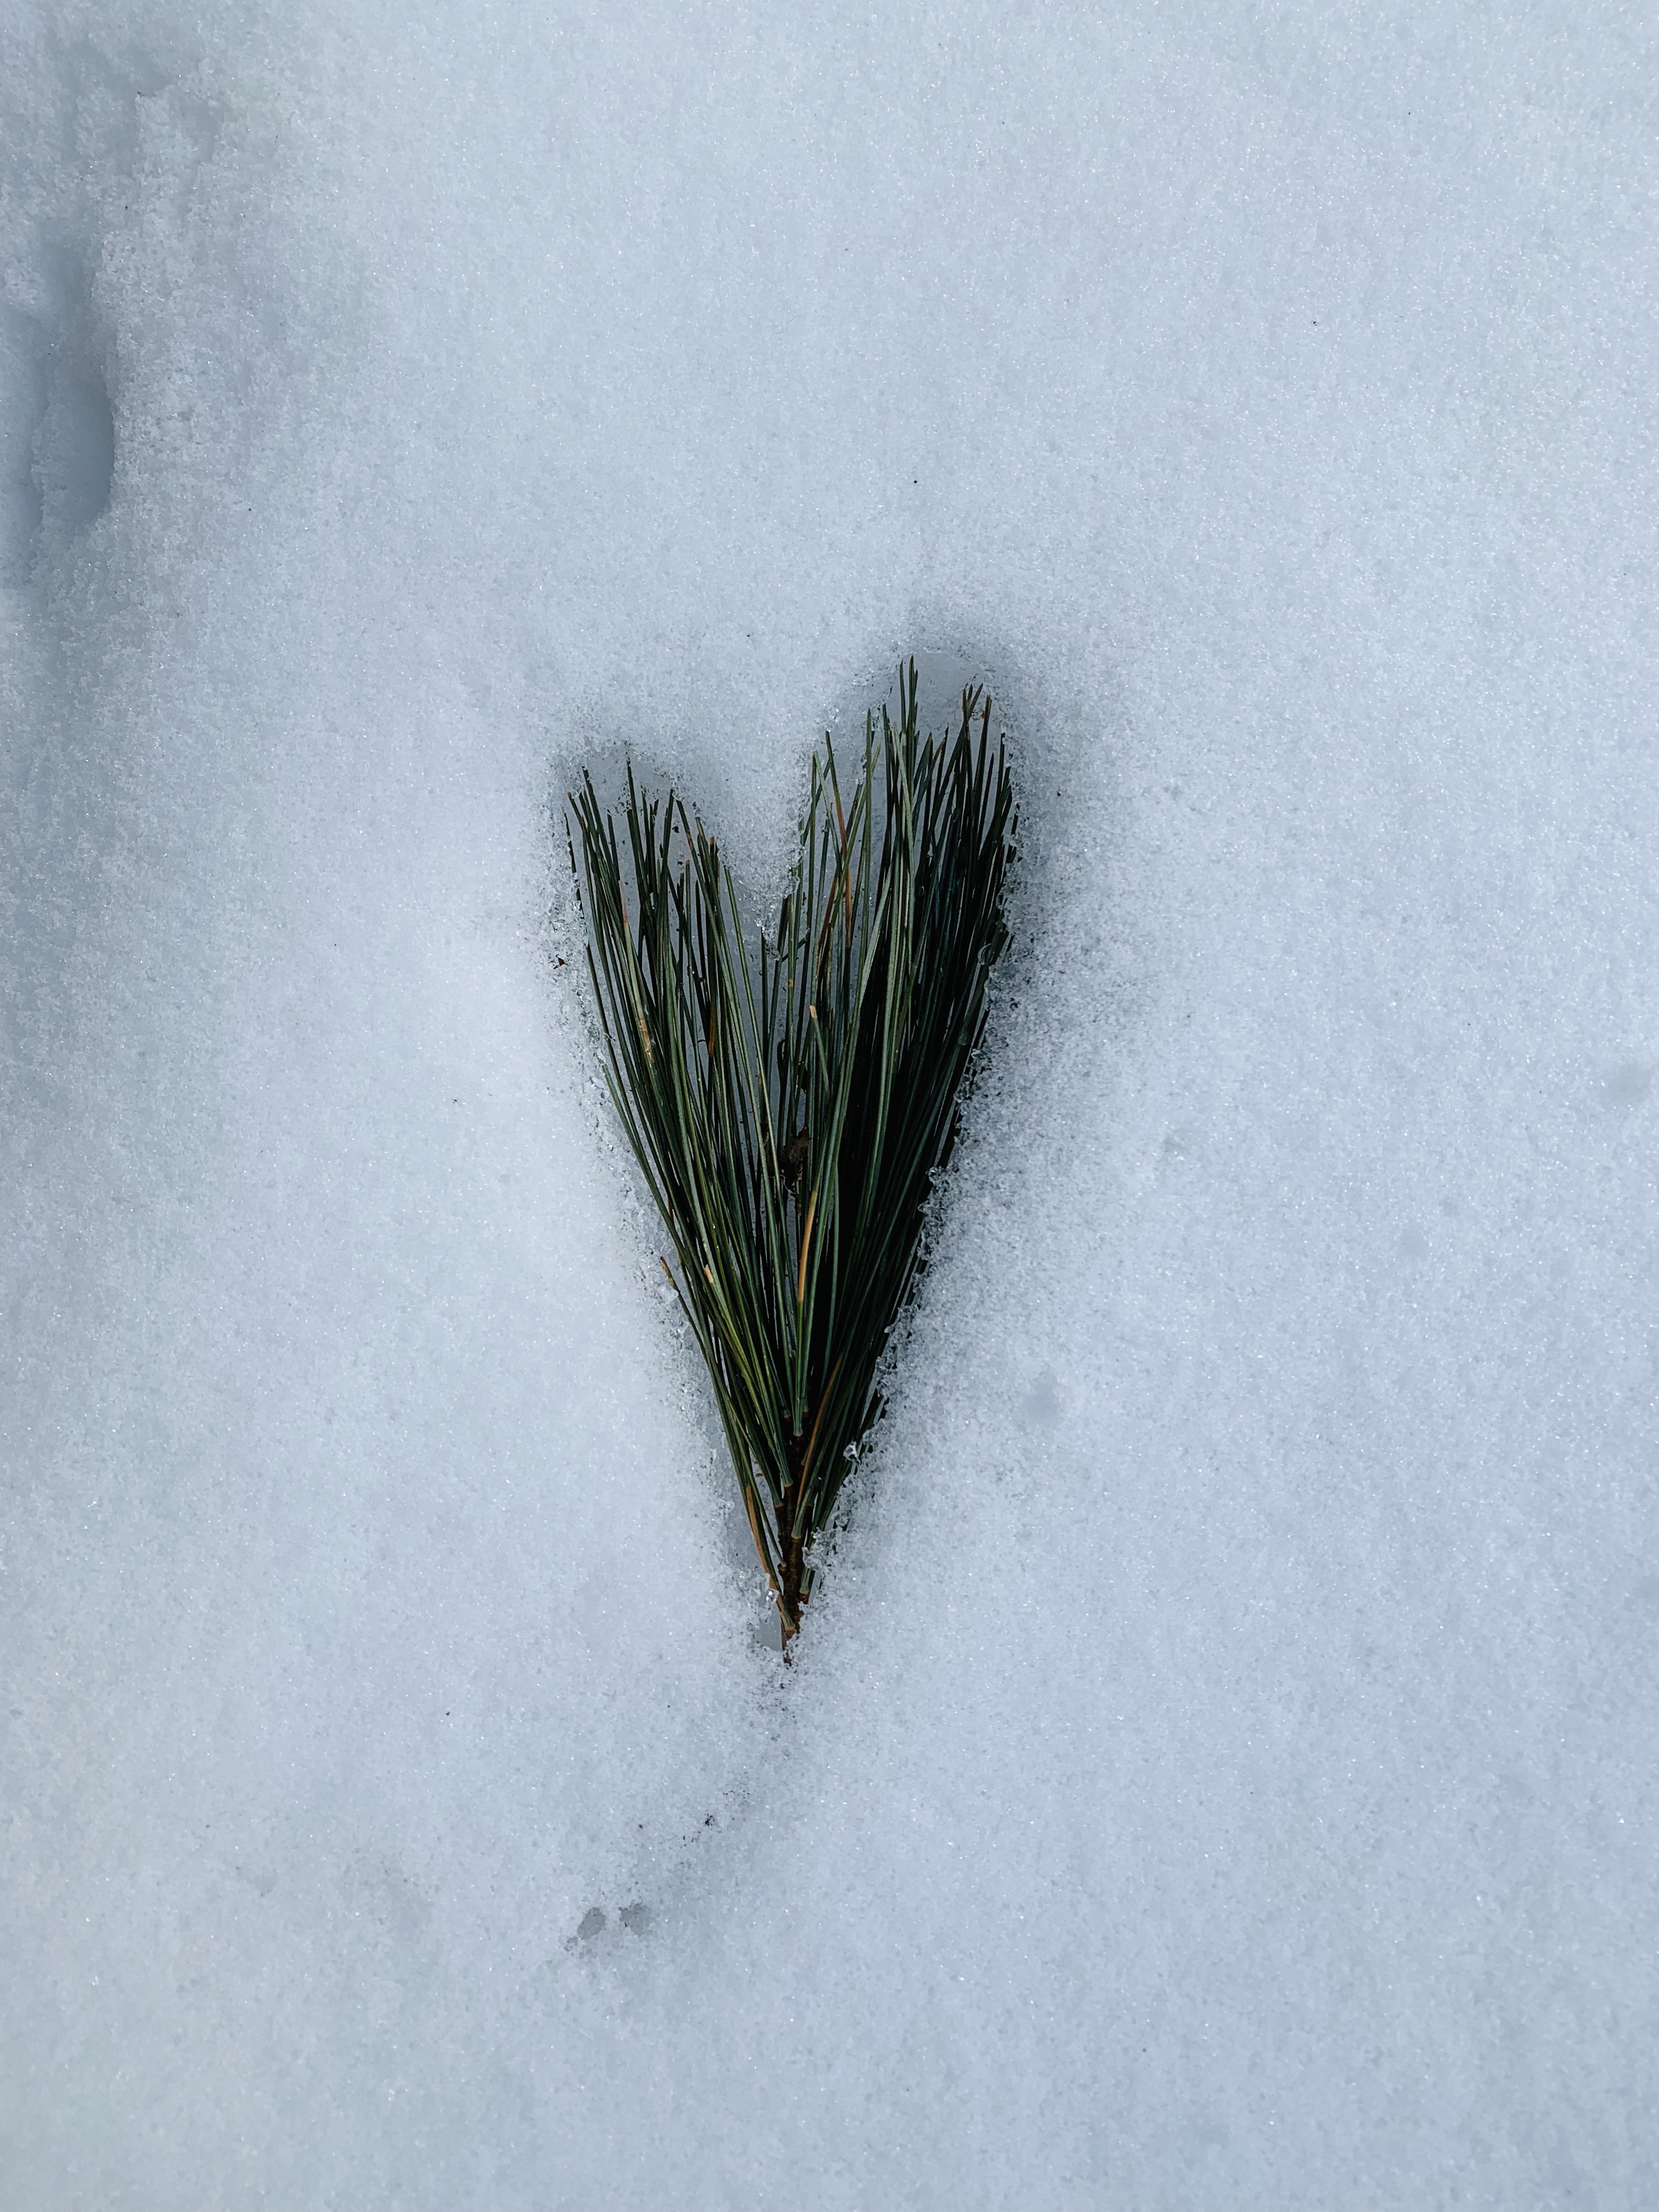 pine needles found Cross country skiing